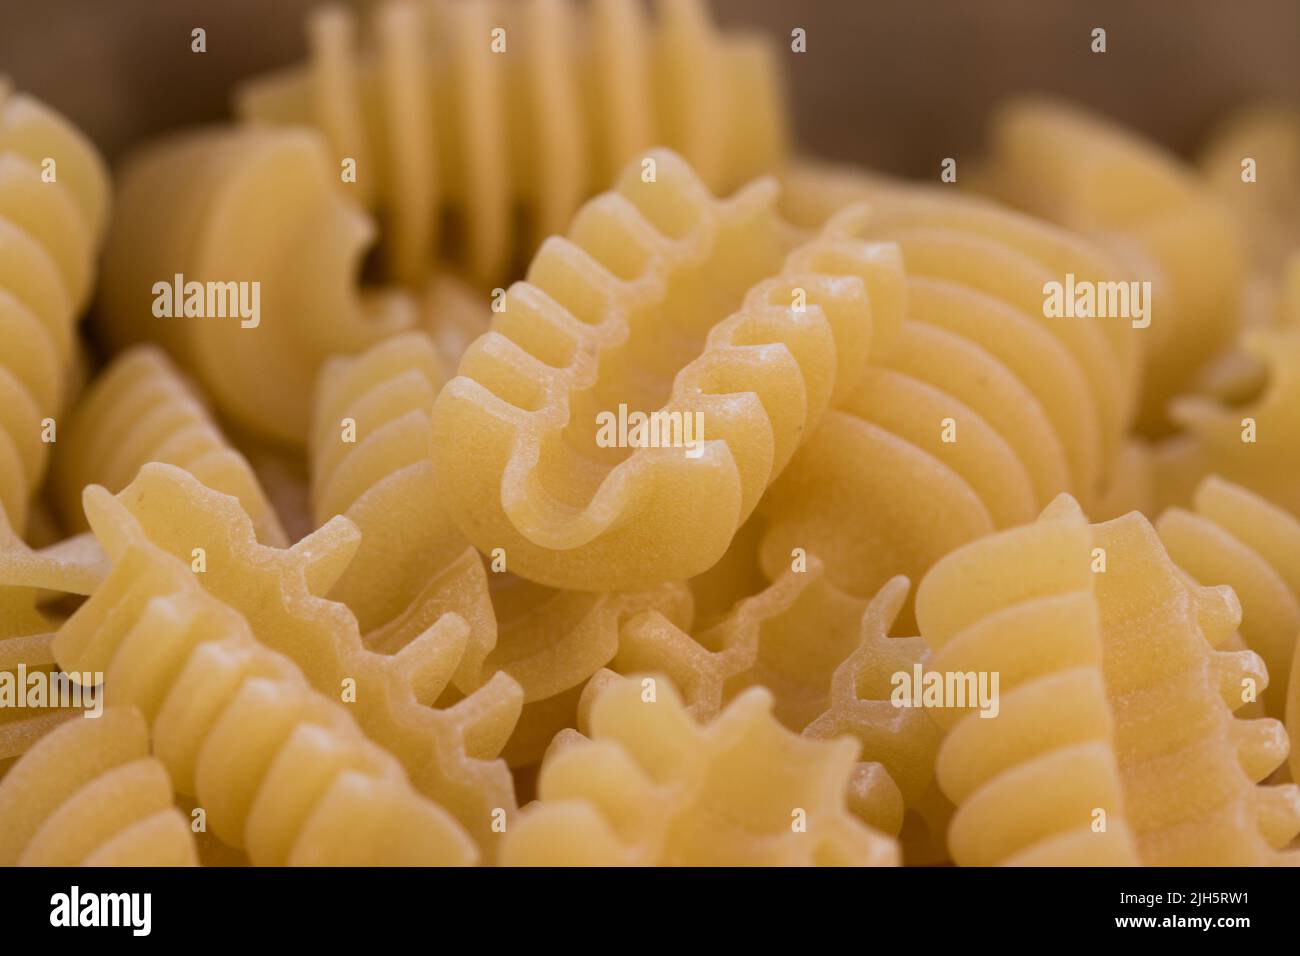 Detail of some radiatori, some pieces of raw Italian pasta whose shape resembles an Italian car radiator Stock Photo